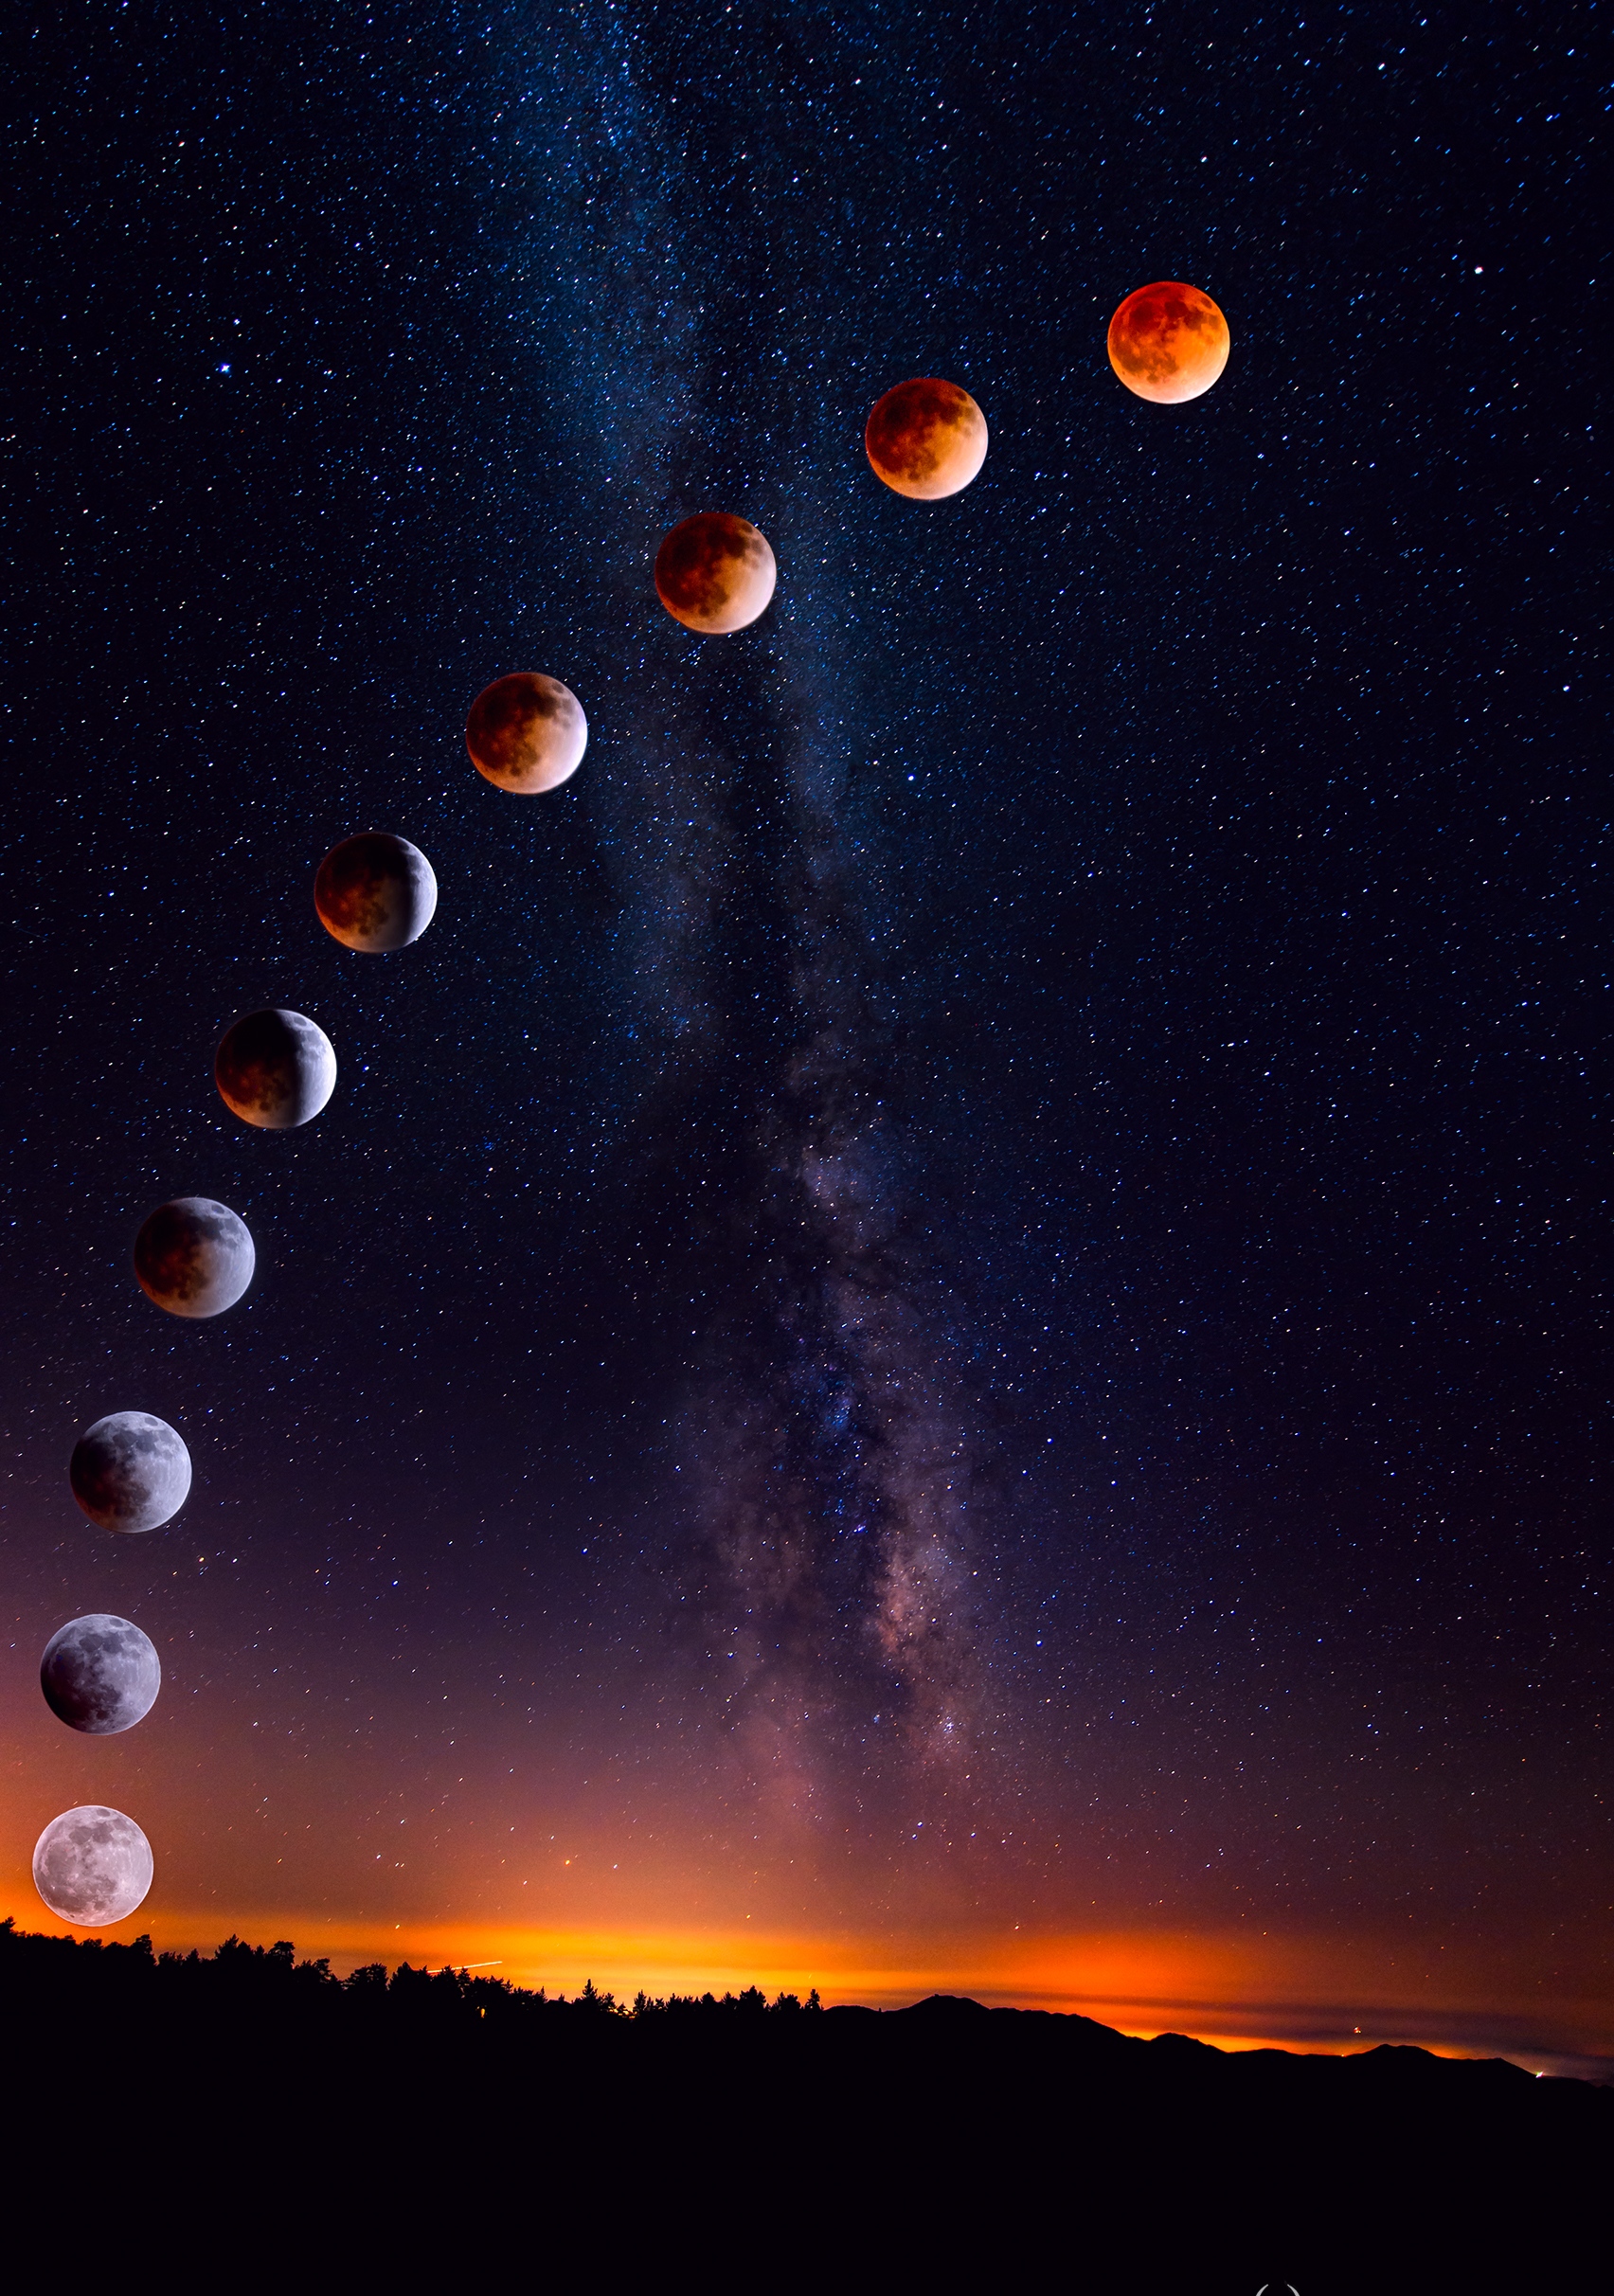 луна в солнечной системе фото